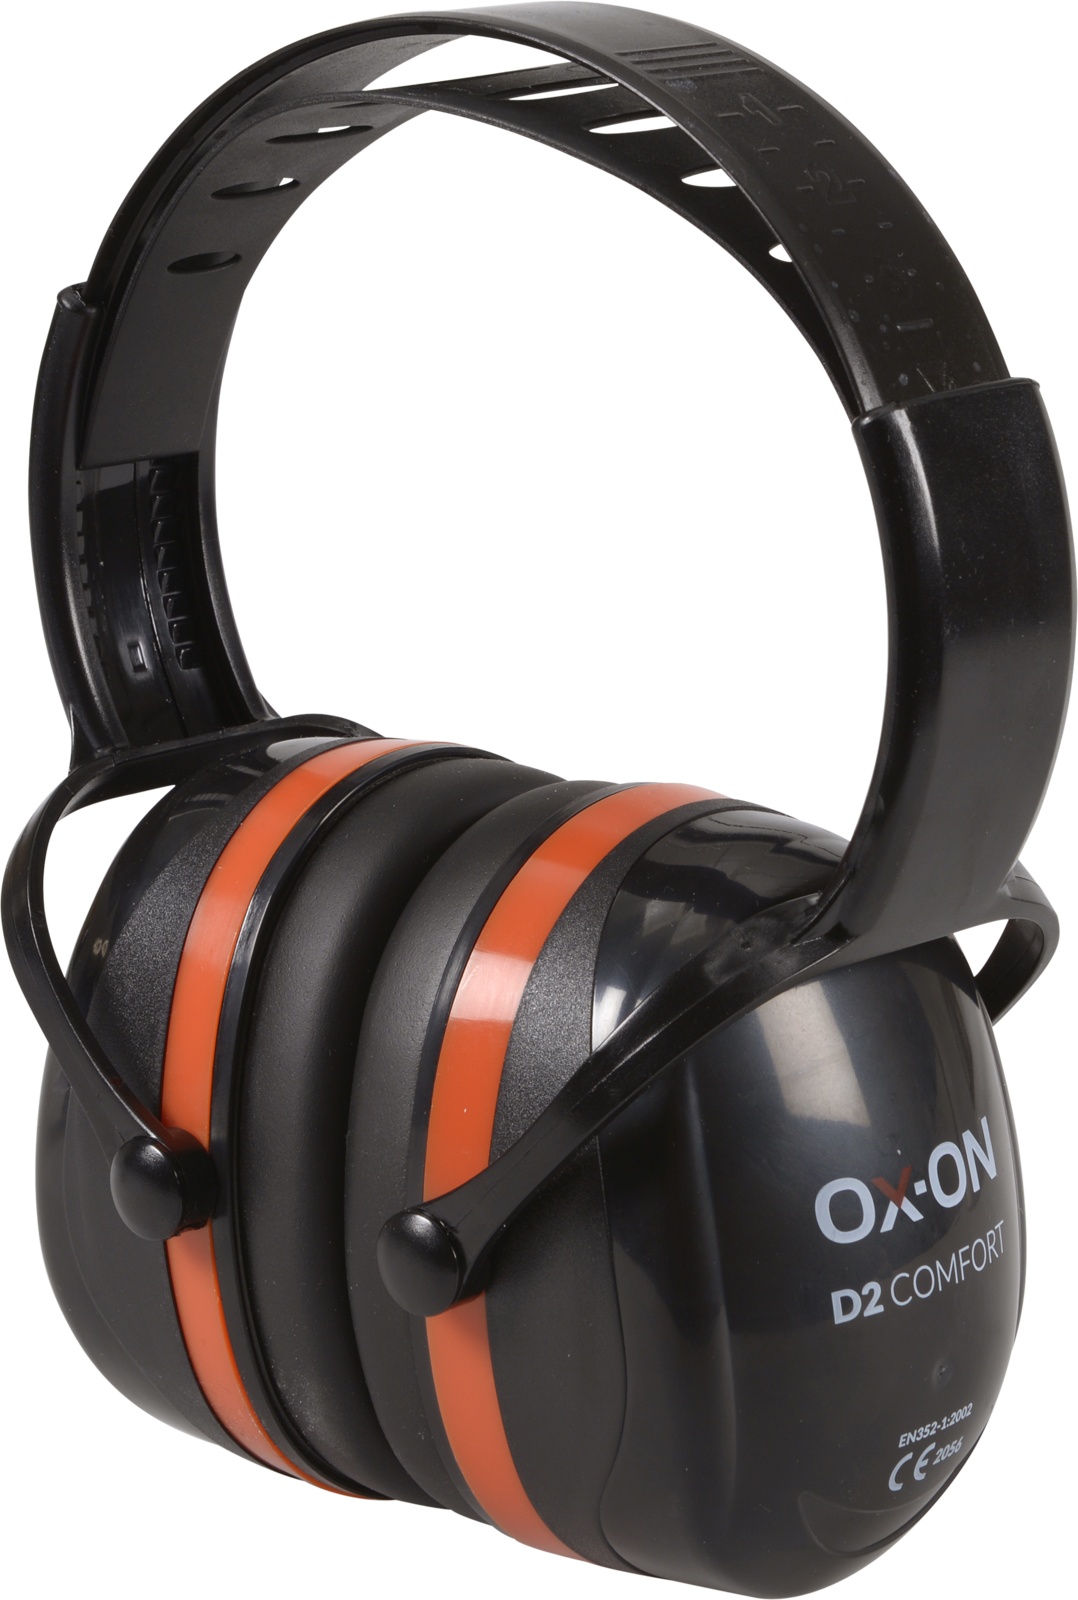 OX-ON Earmuffs D2 Comfort 331.41